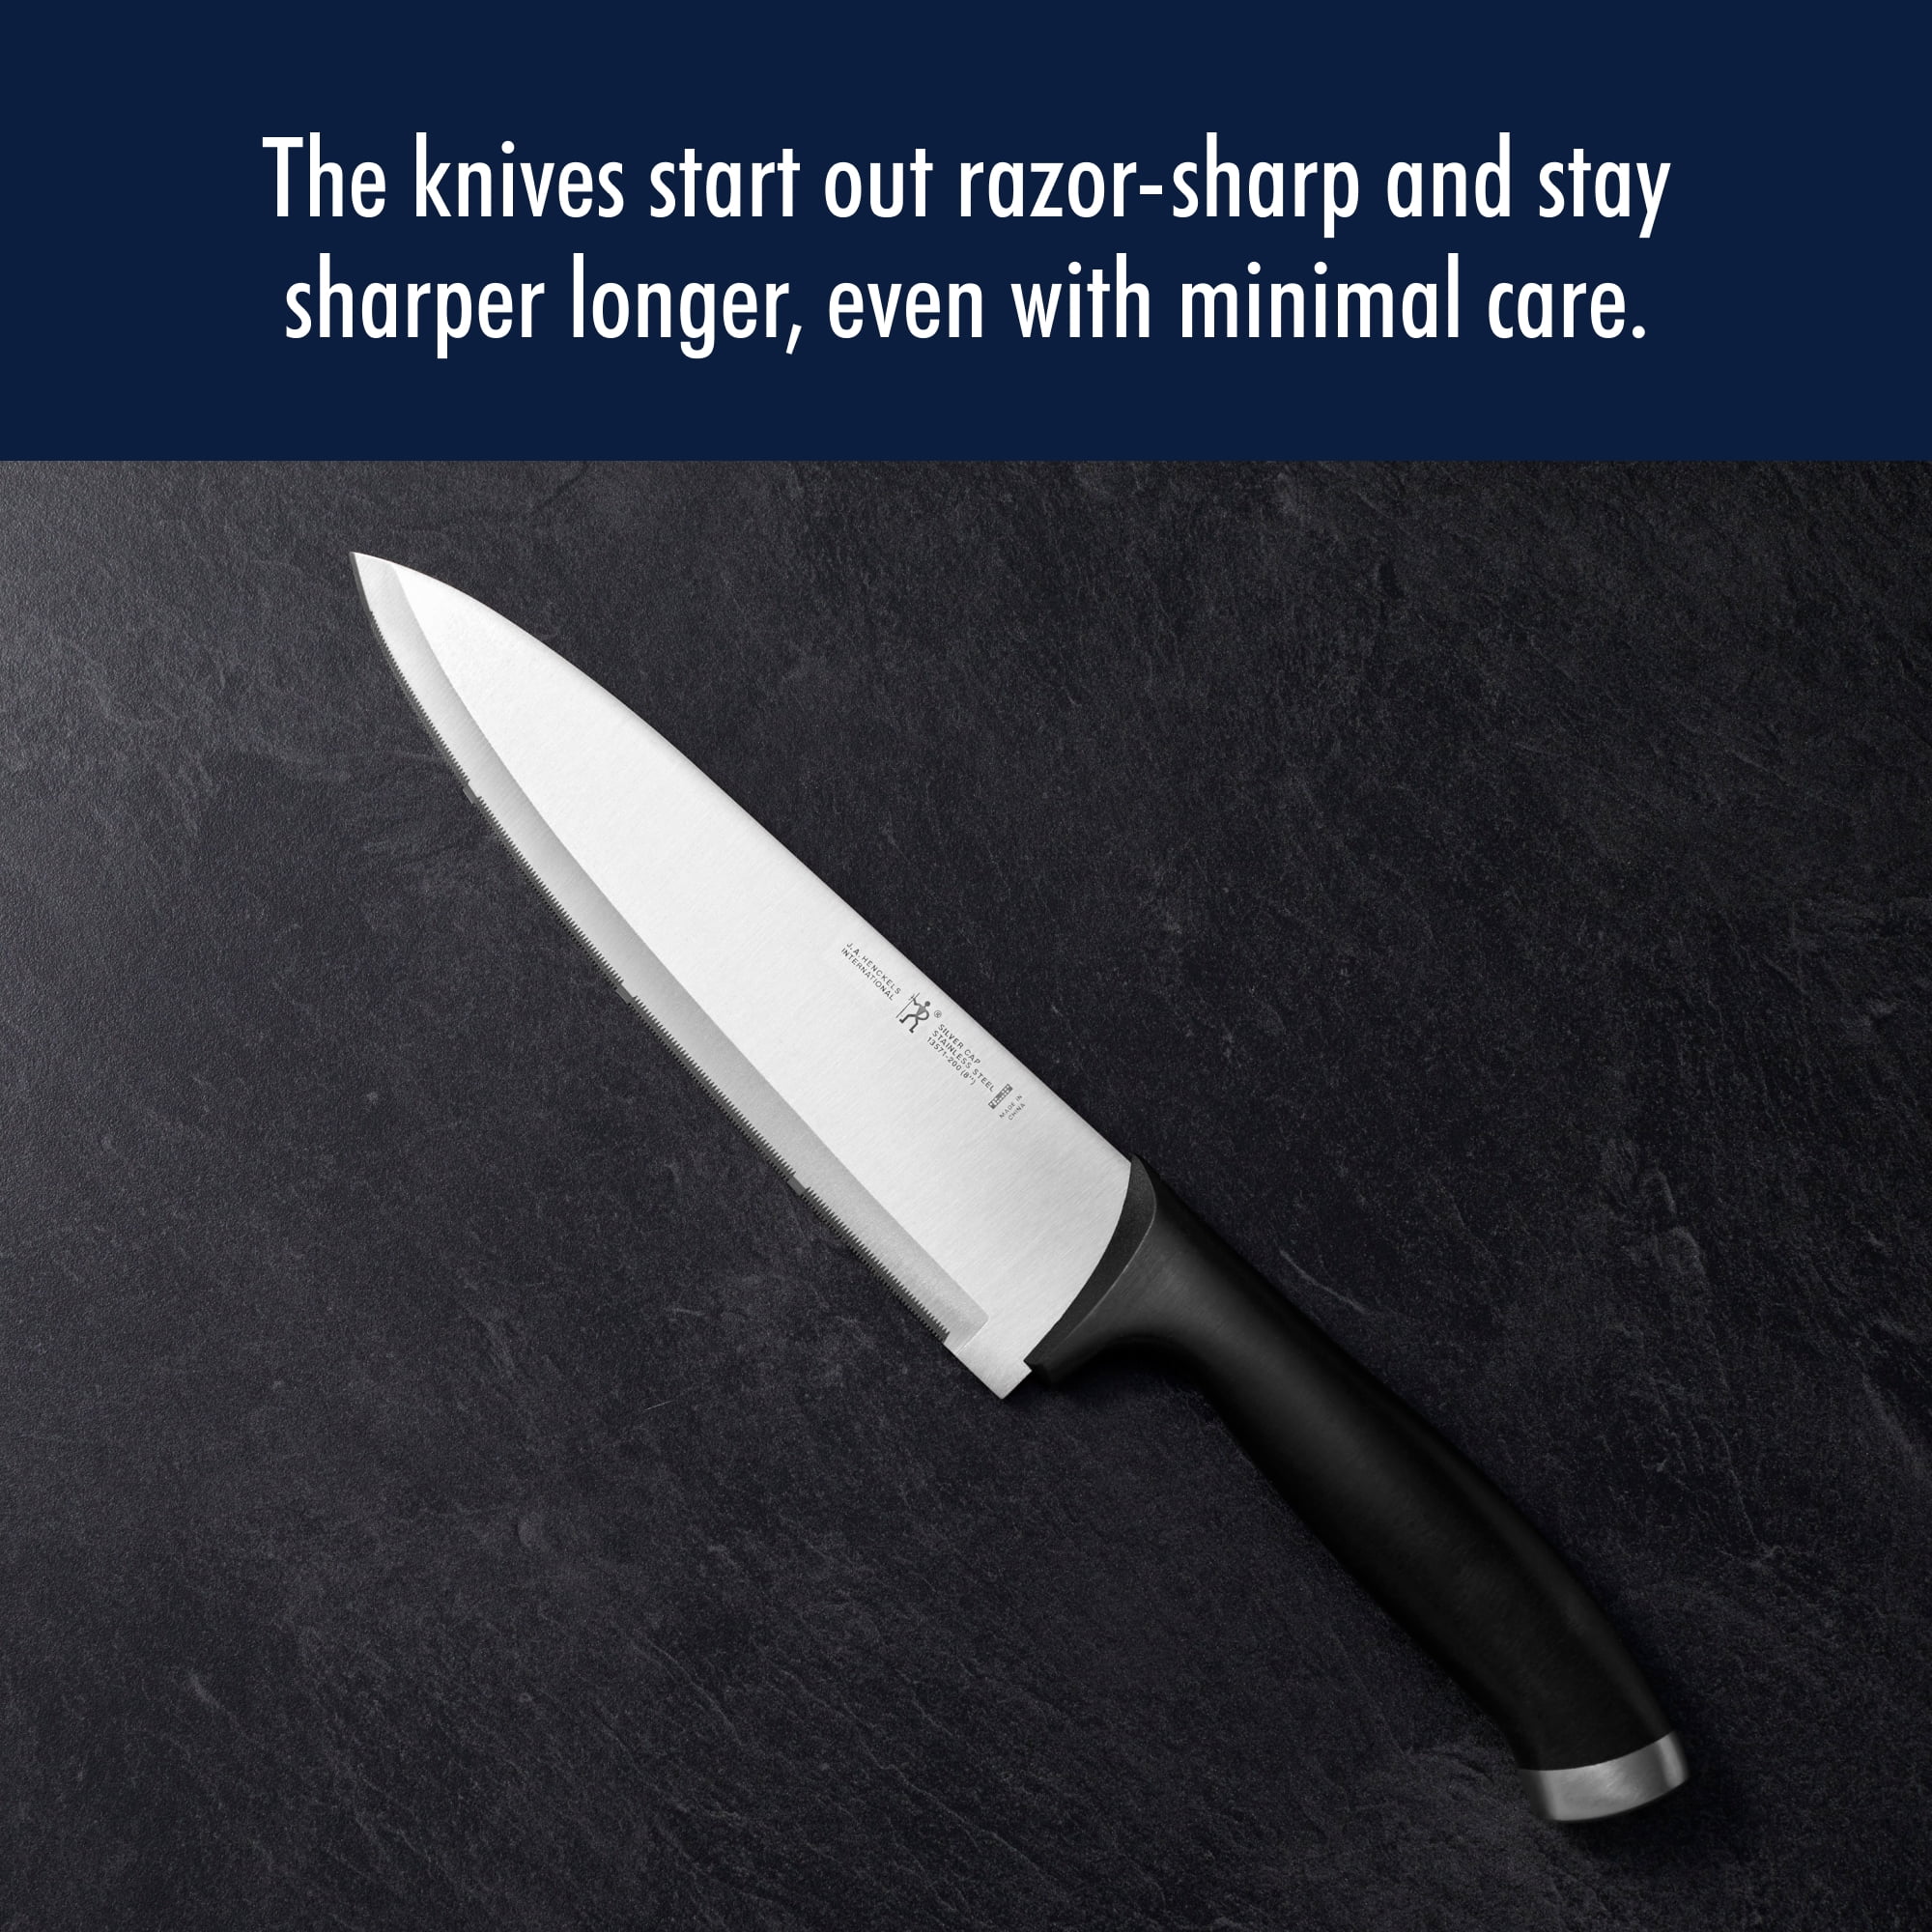 Henckels Definition Chefs Knife - Silver/Black, 8-inch - Kroger